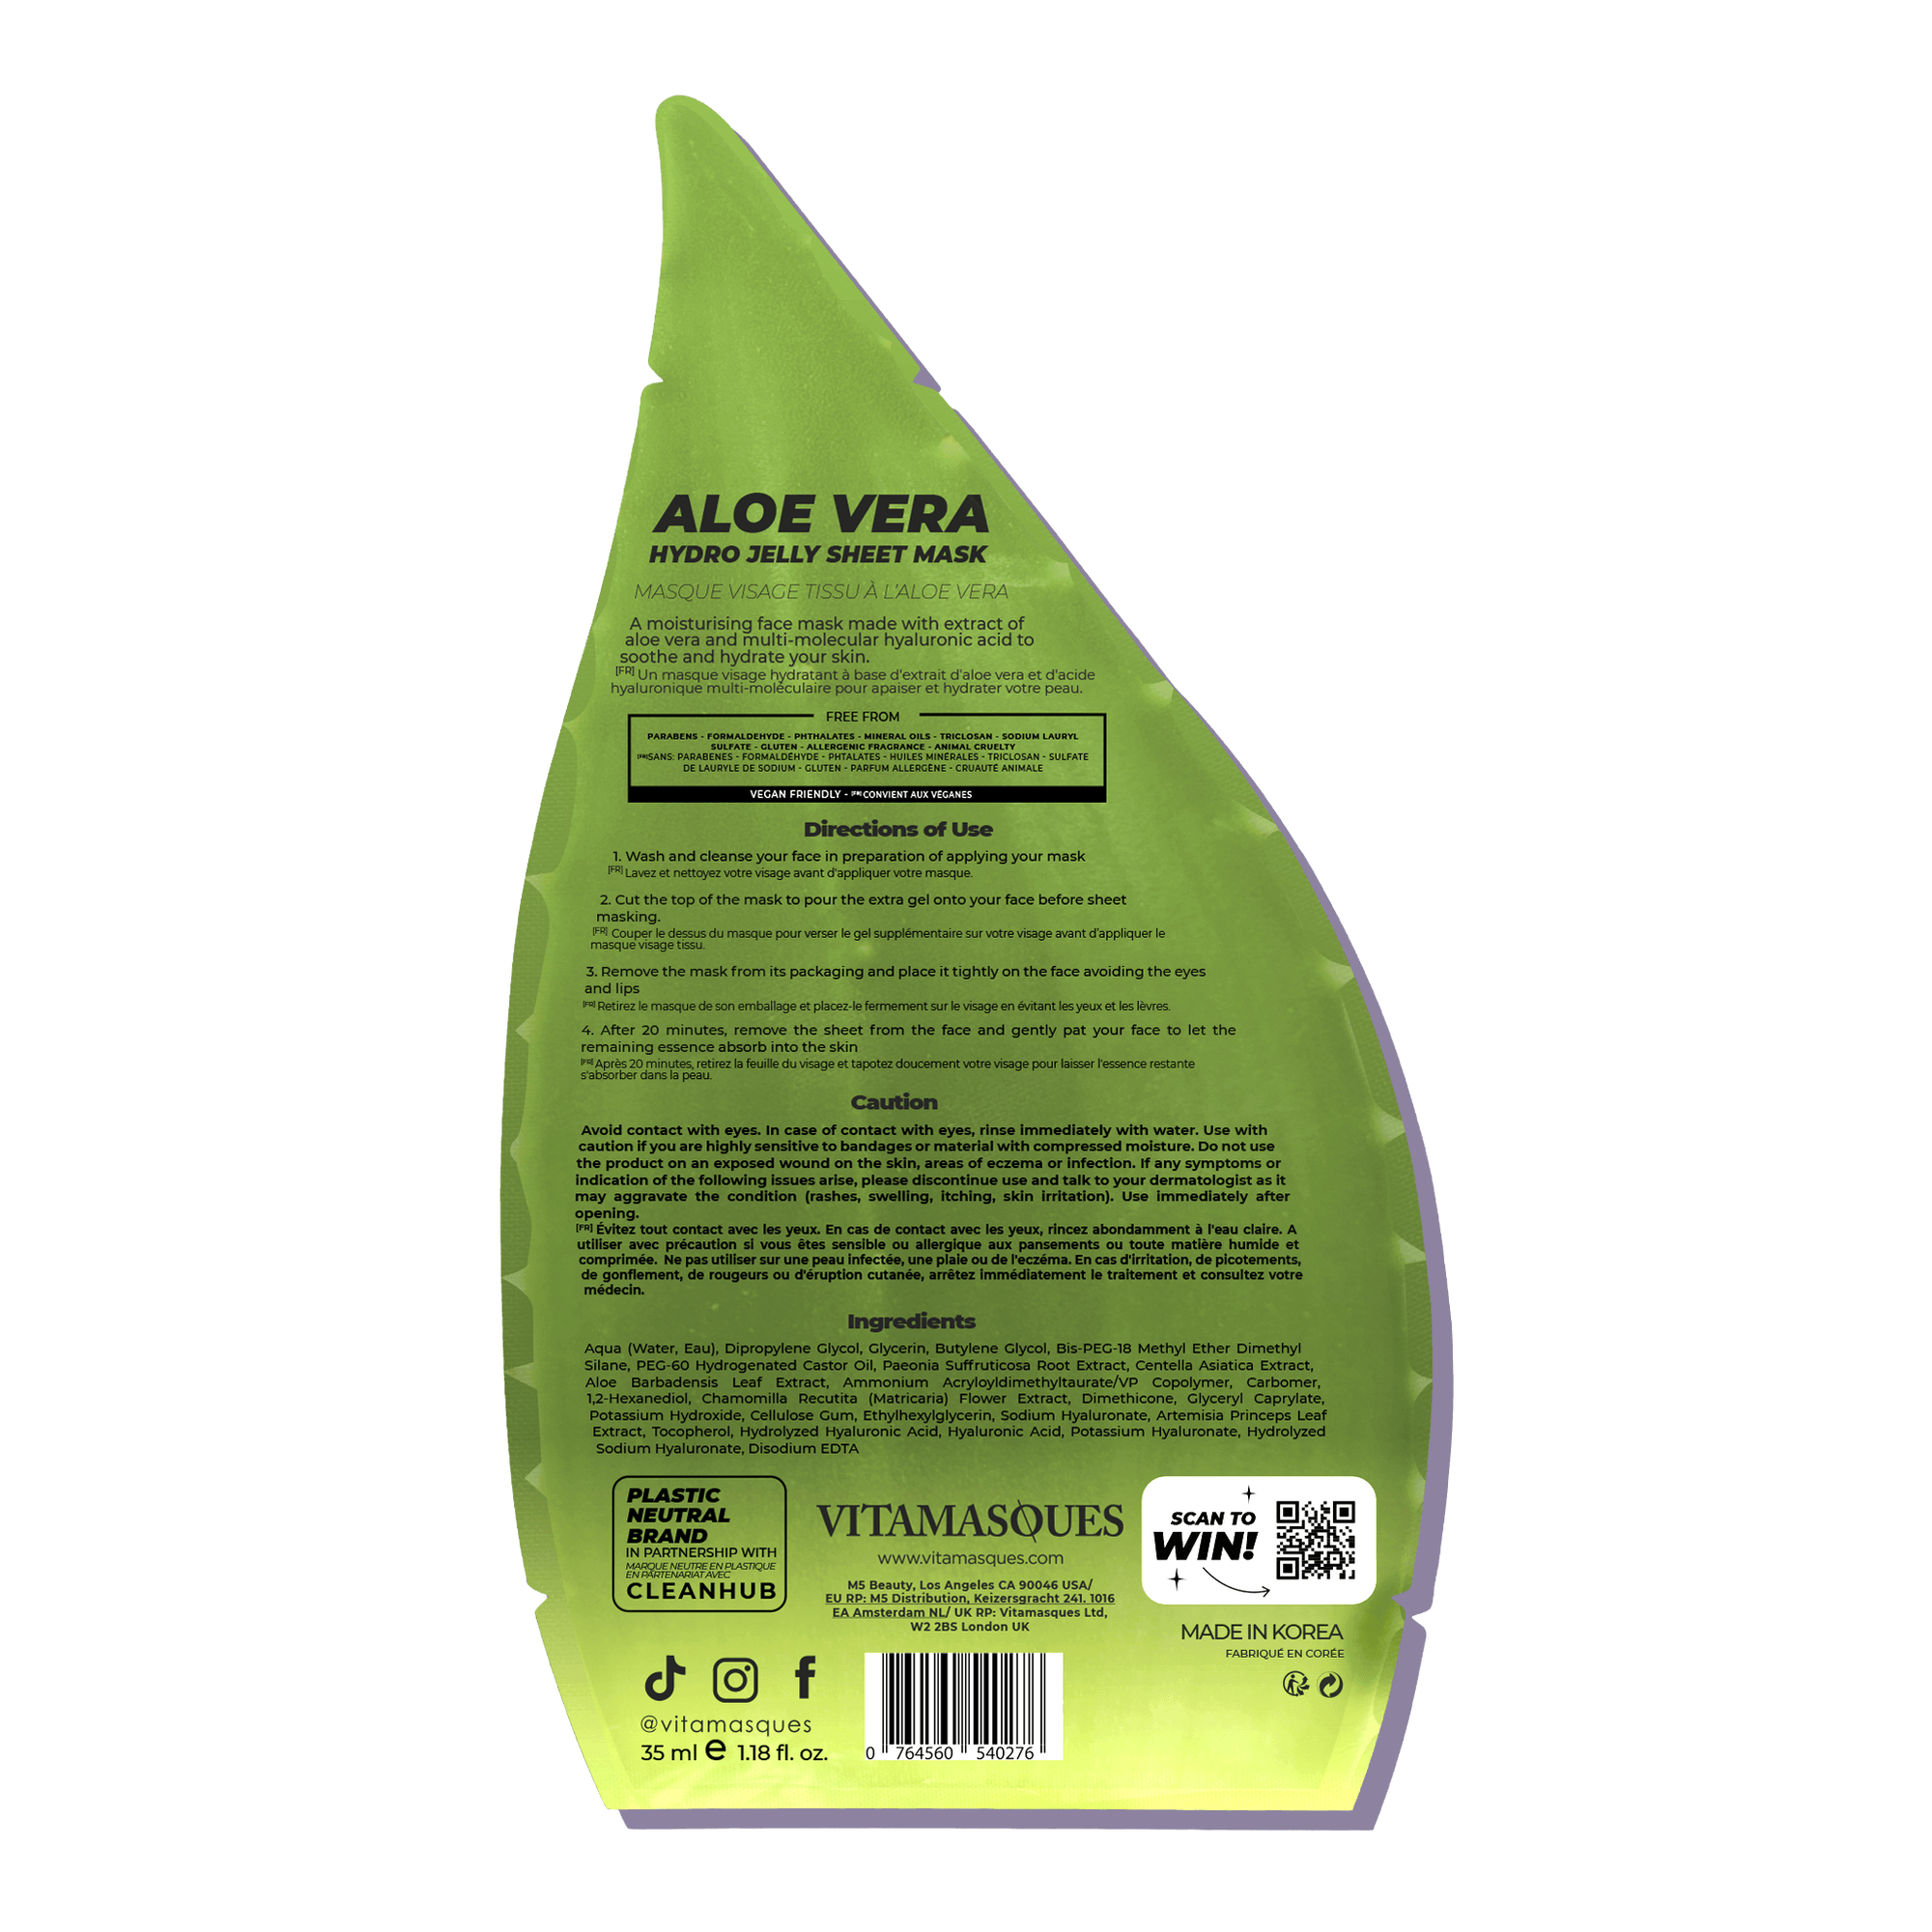 Aloe Vera Hydro Jelly Sheet Mask - Vitamasques